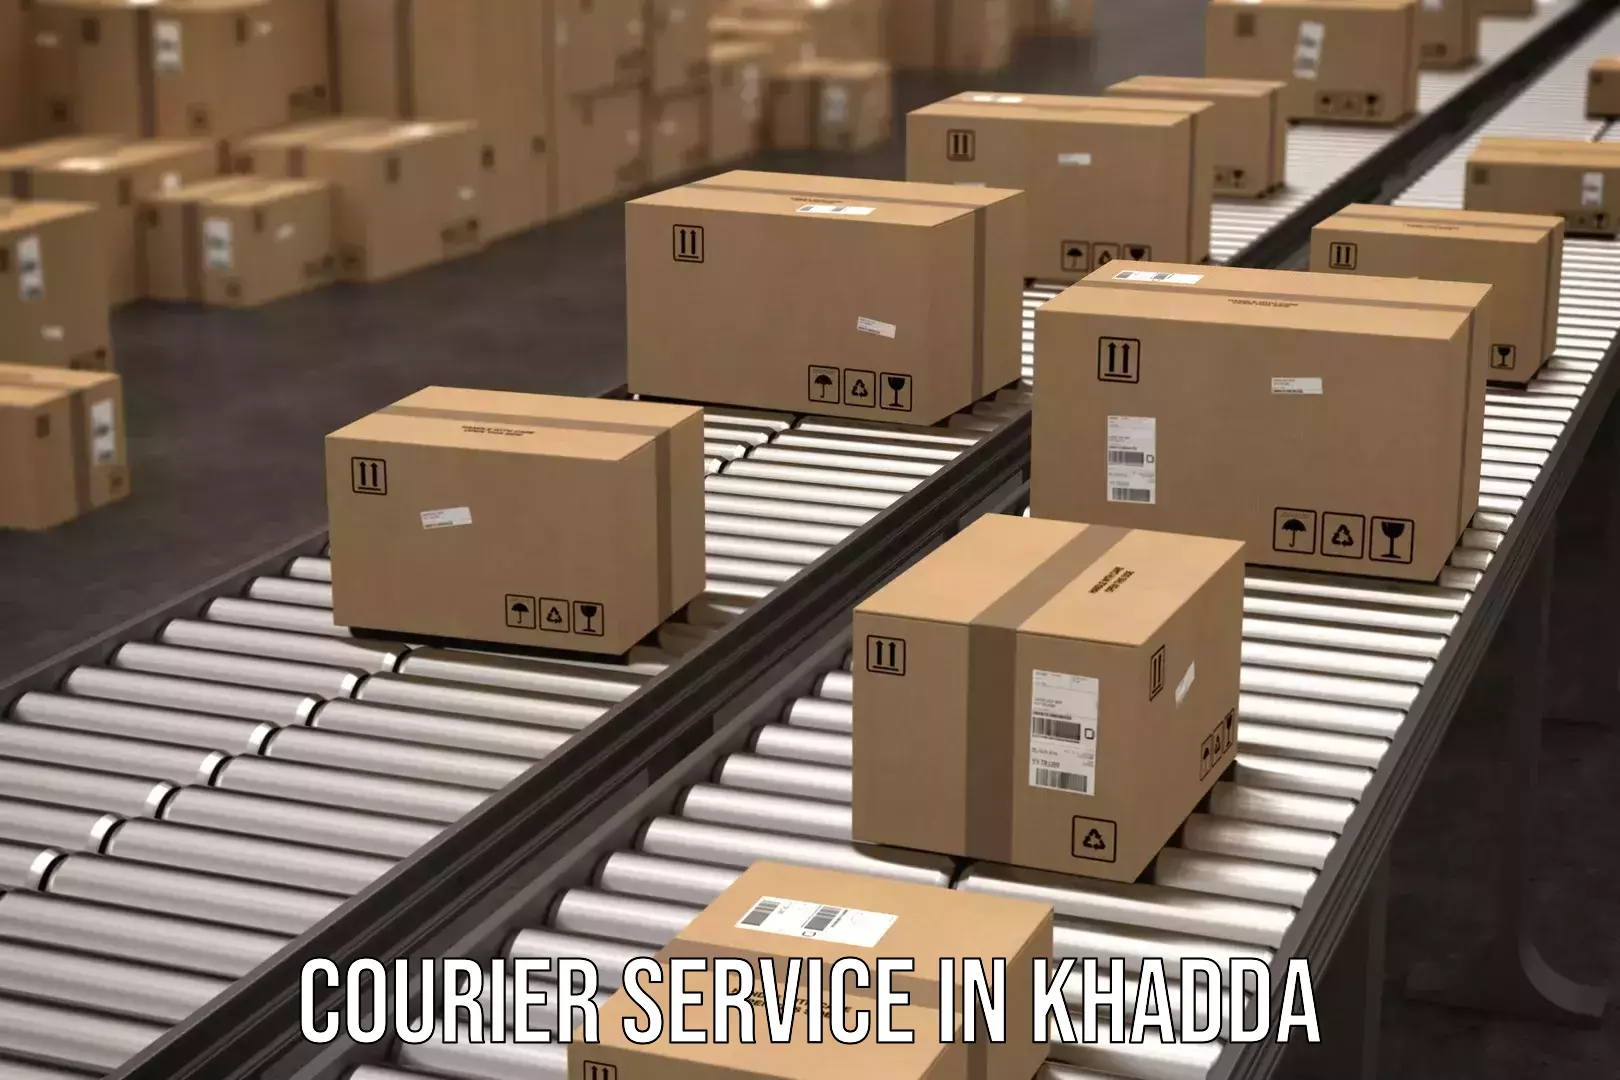 Courier service efficiency in Khadda